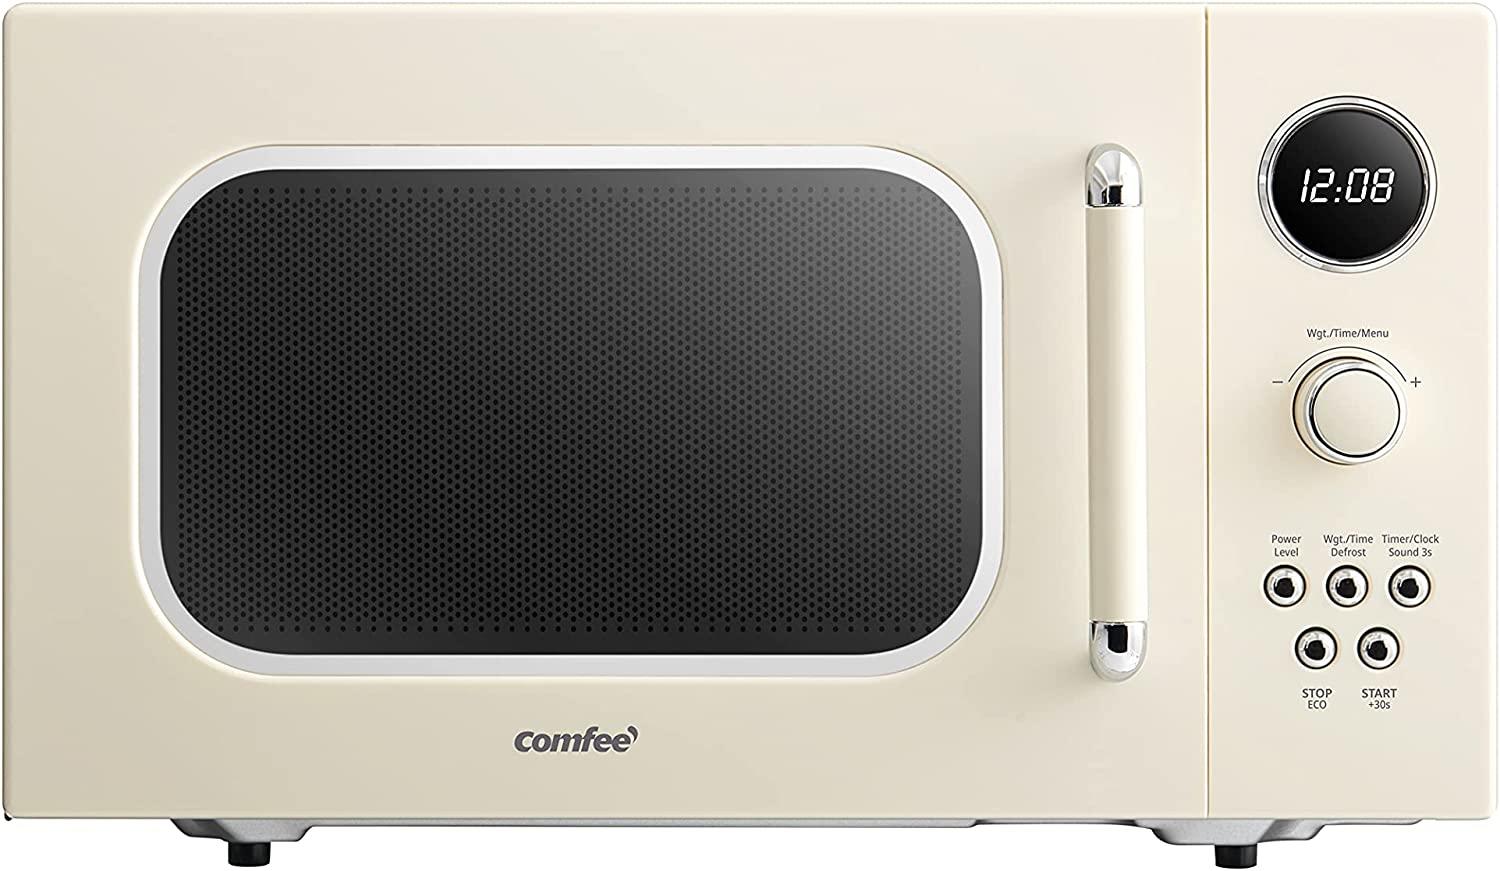 Comfee retro microwave: $100 